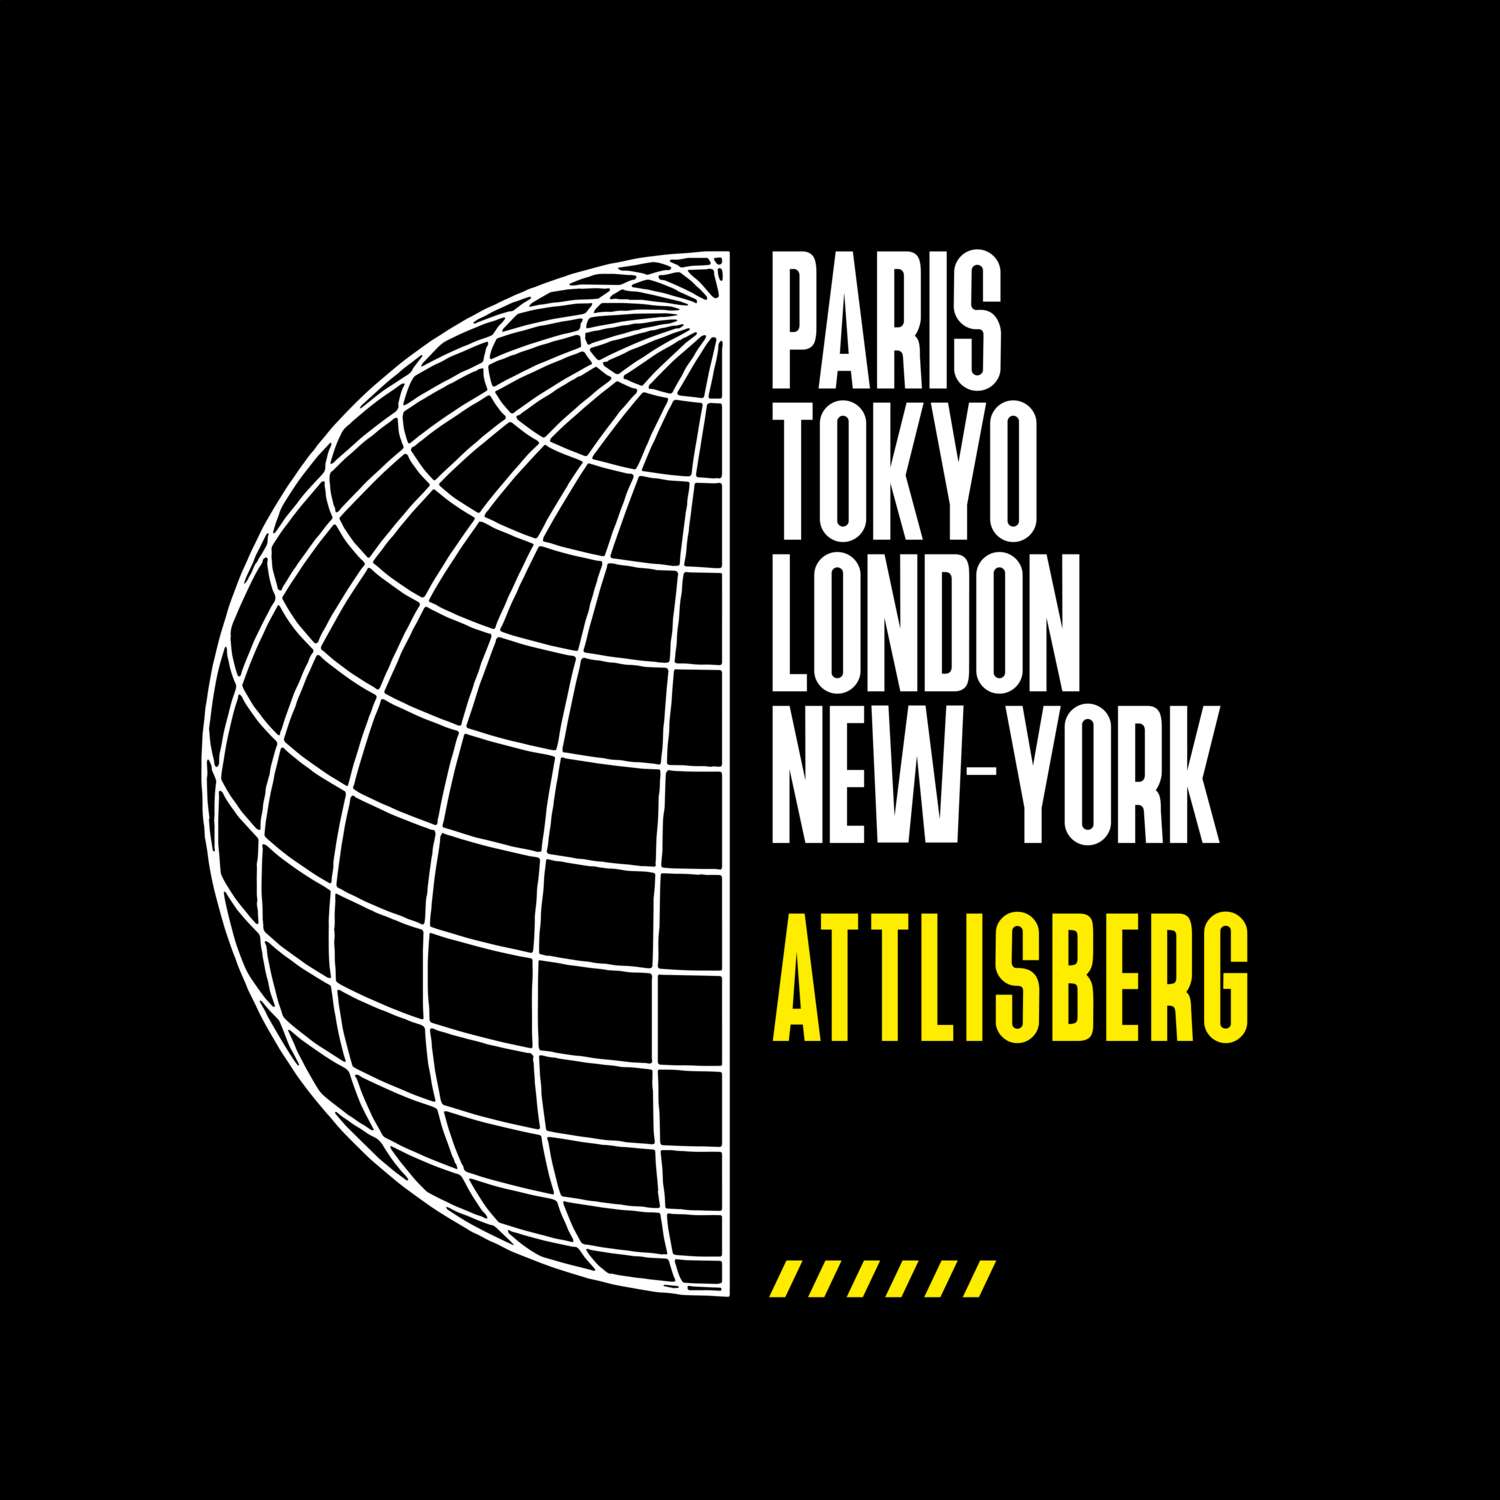 Attlisberg T-Shirt »Paris Tokyo London«